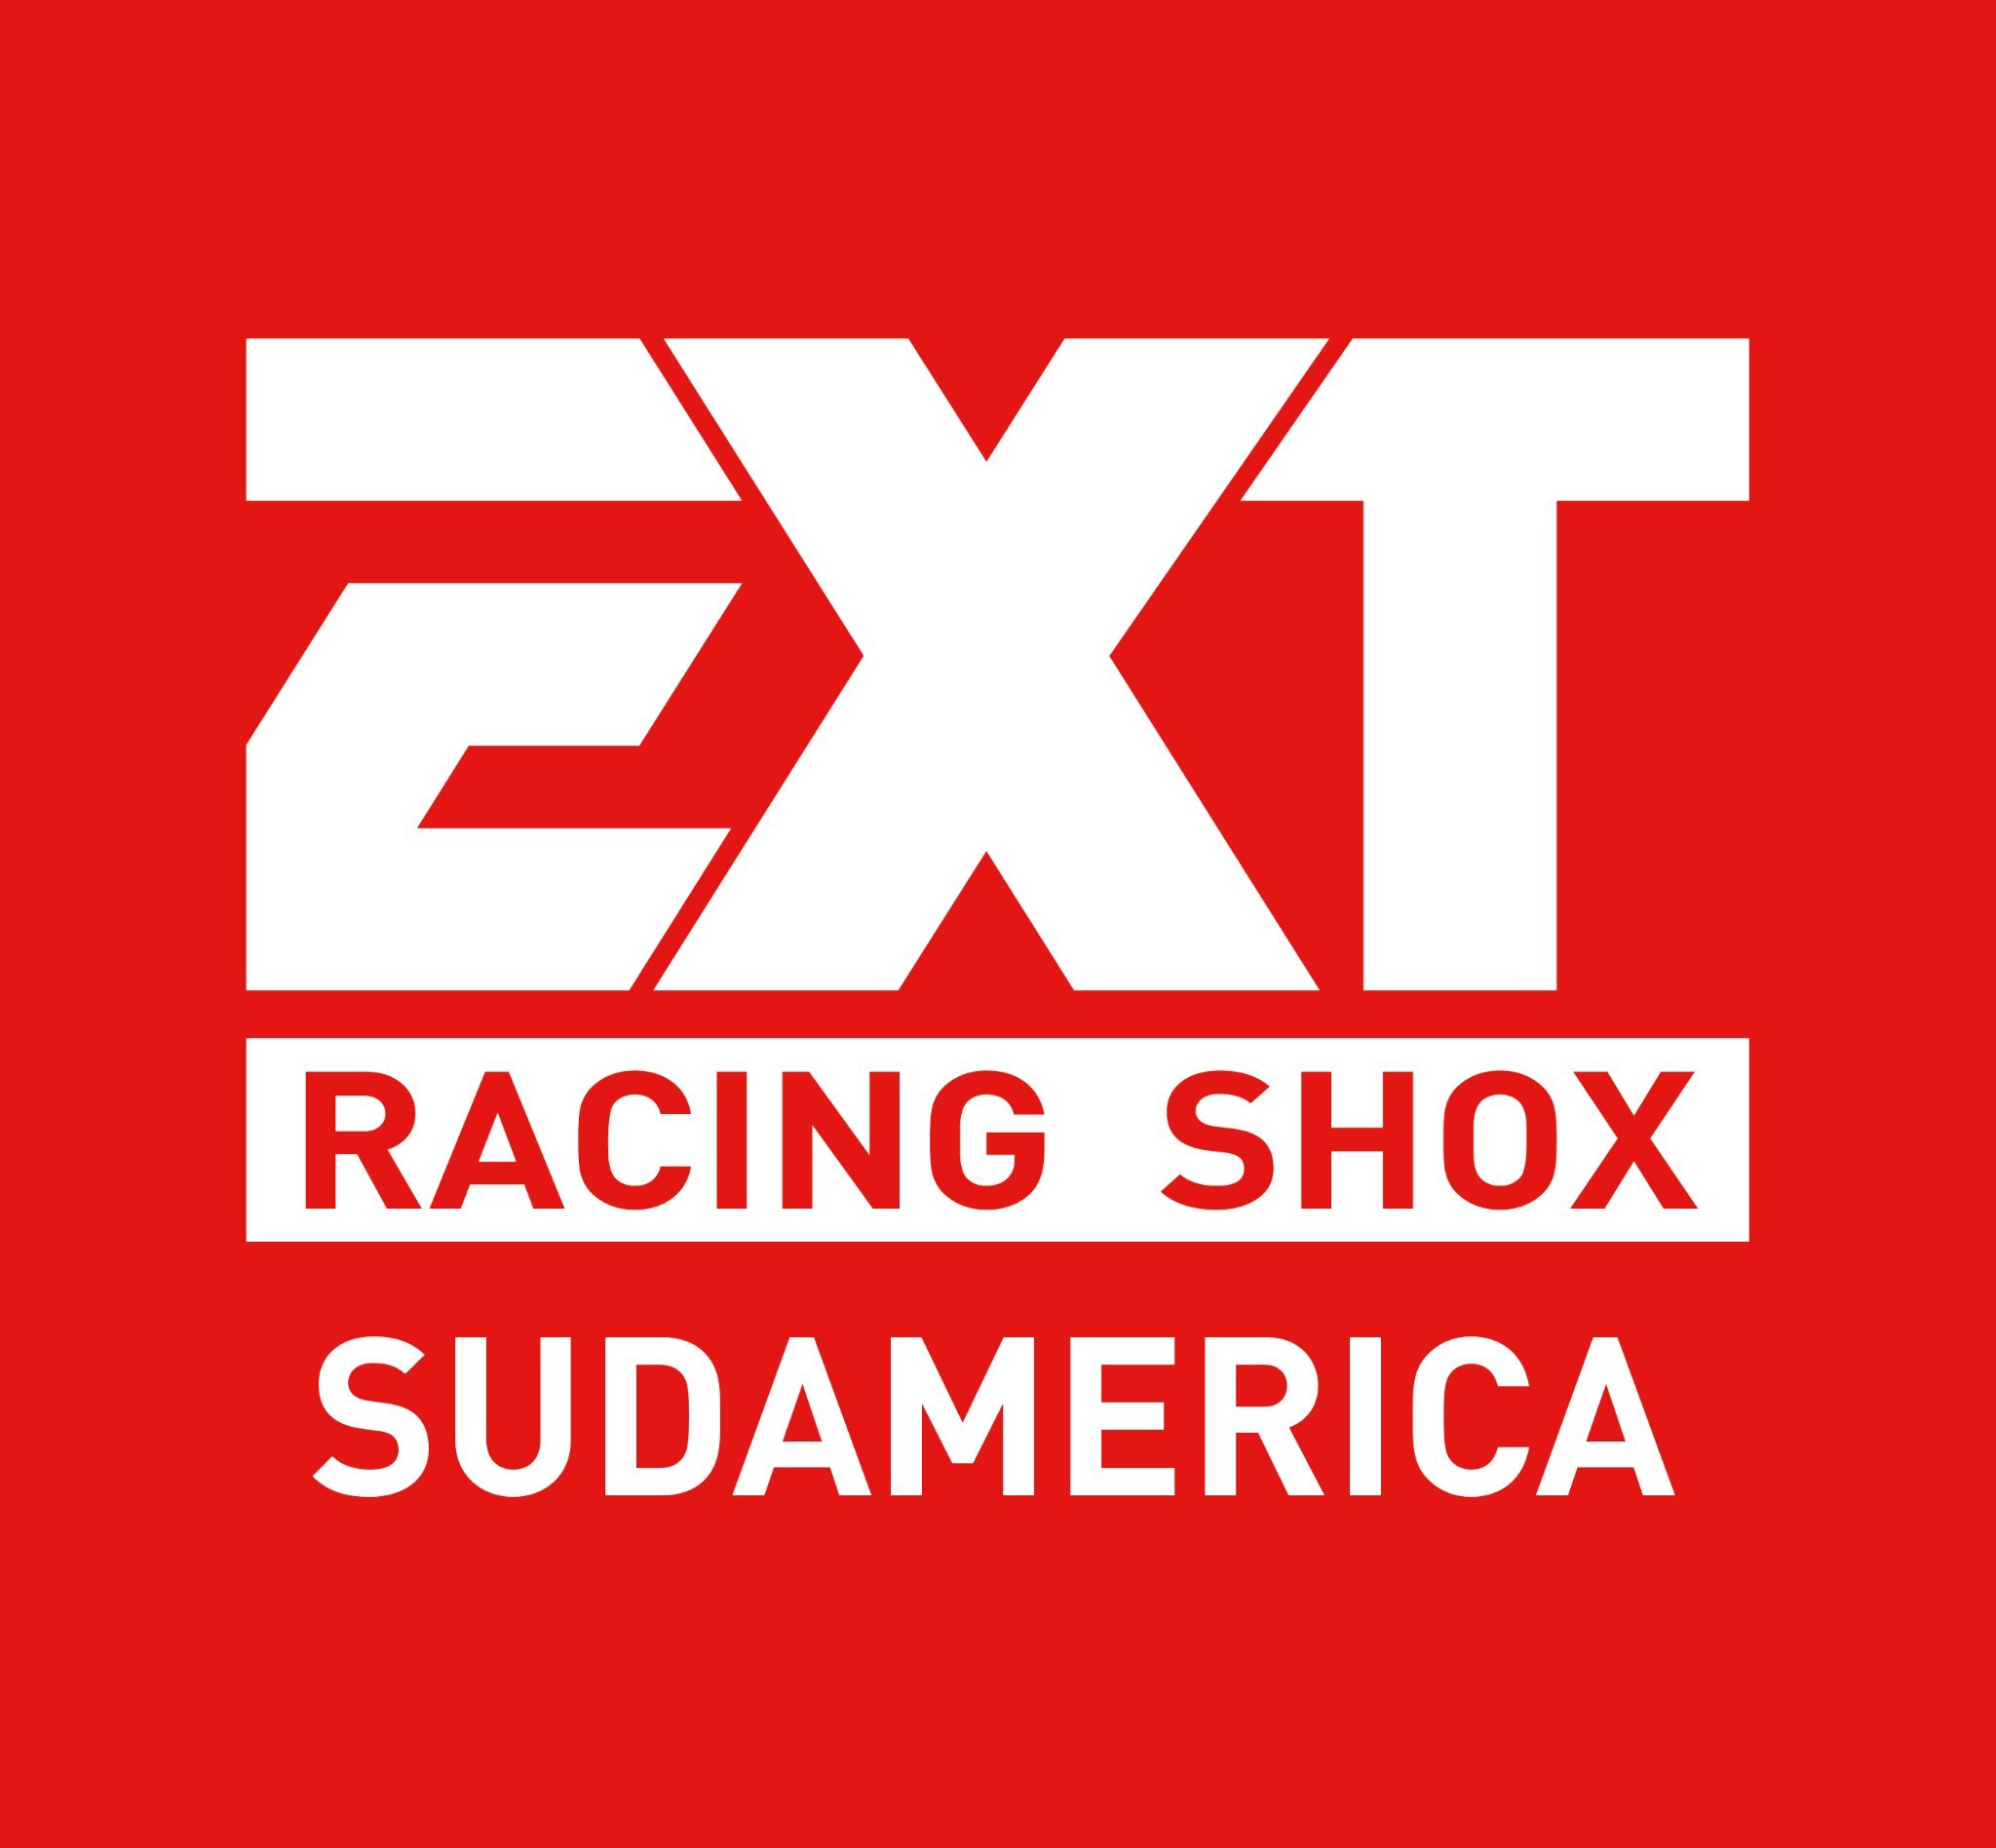 Extreme Shox Sudamerica